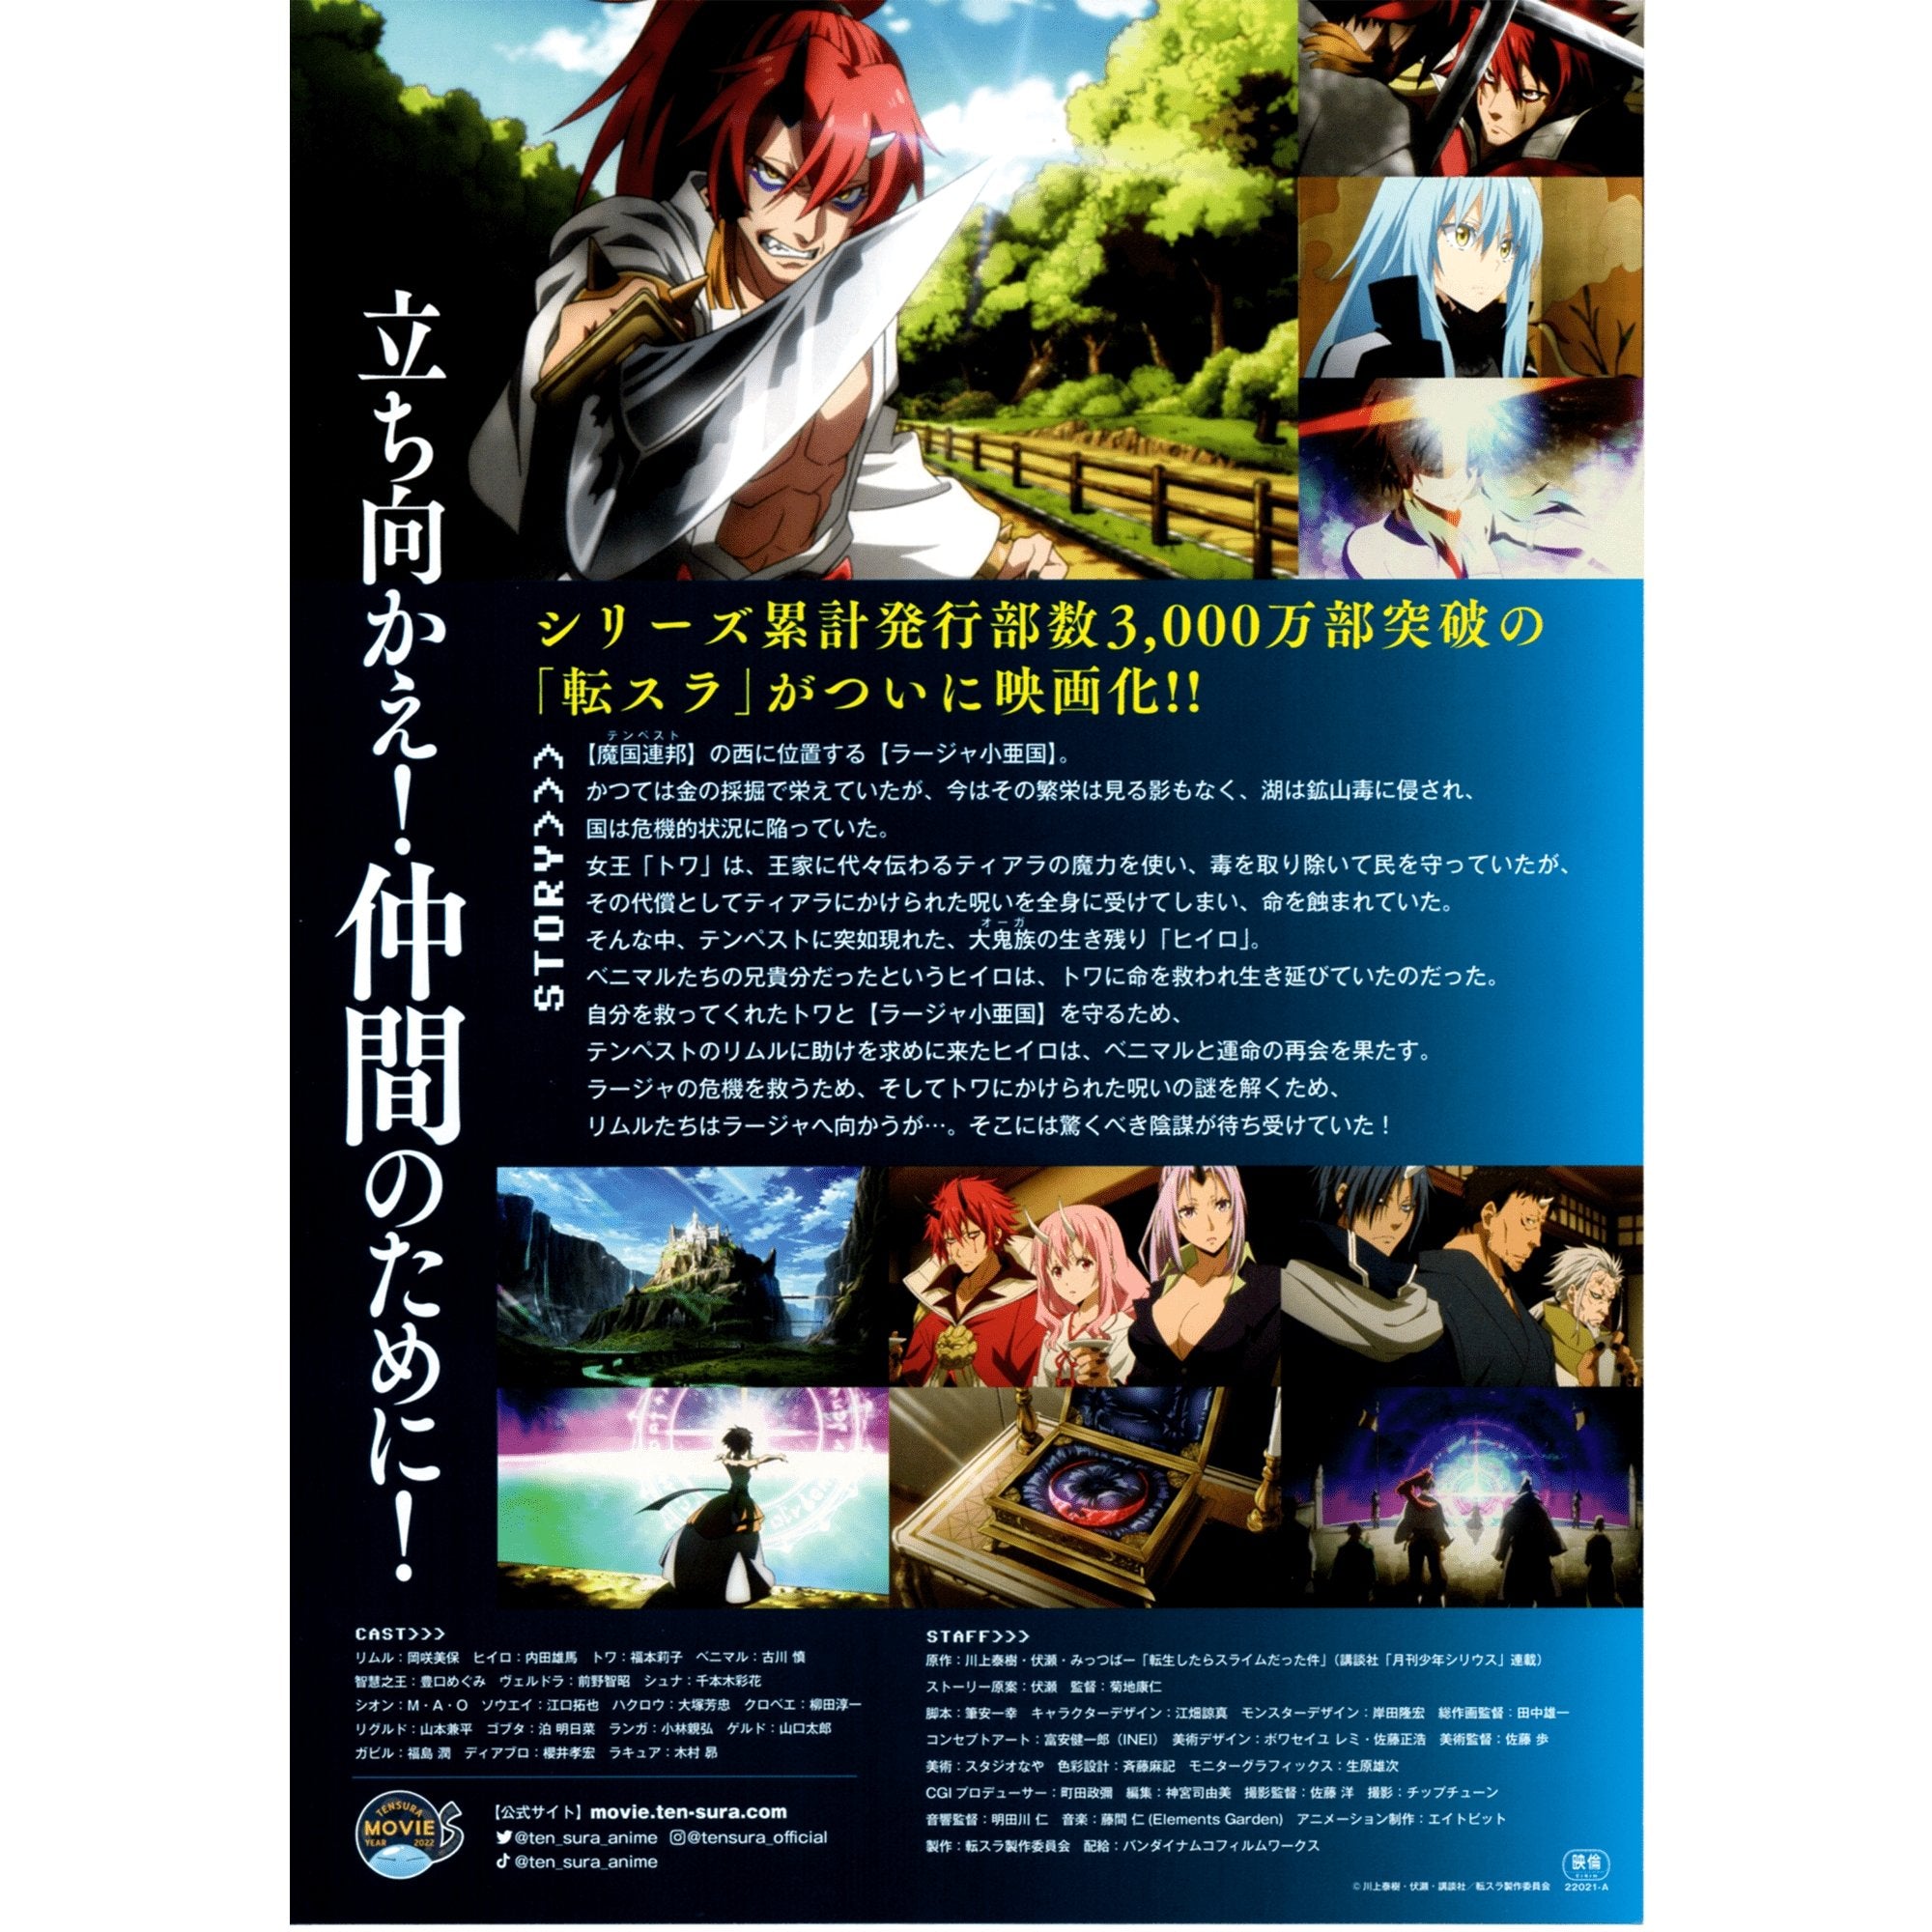 Tensei Shitara Slime Datta Ken Movie Announces Release Date - American Post